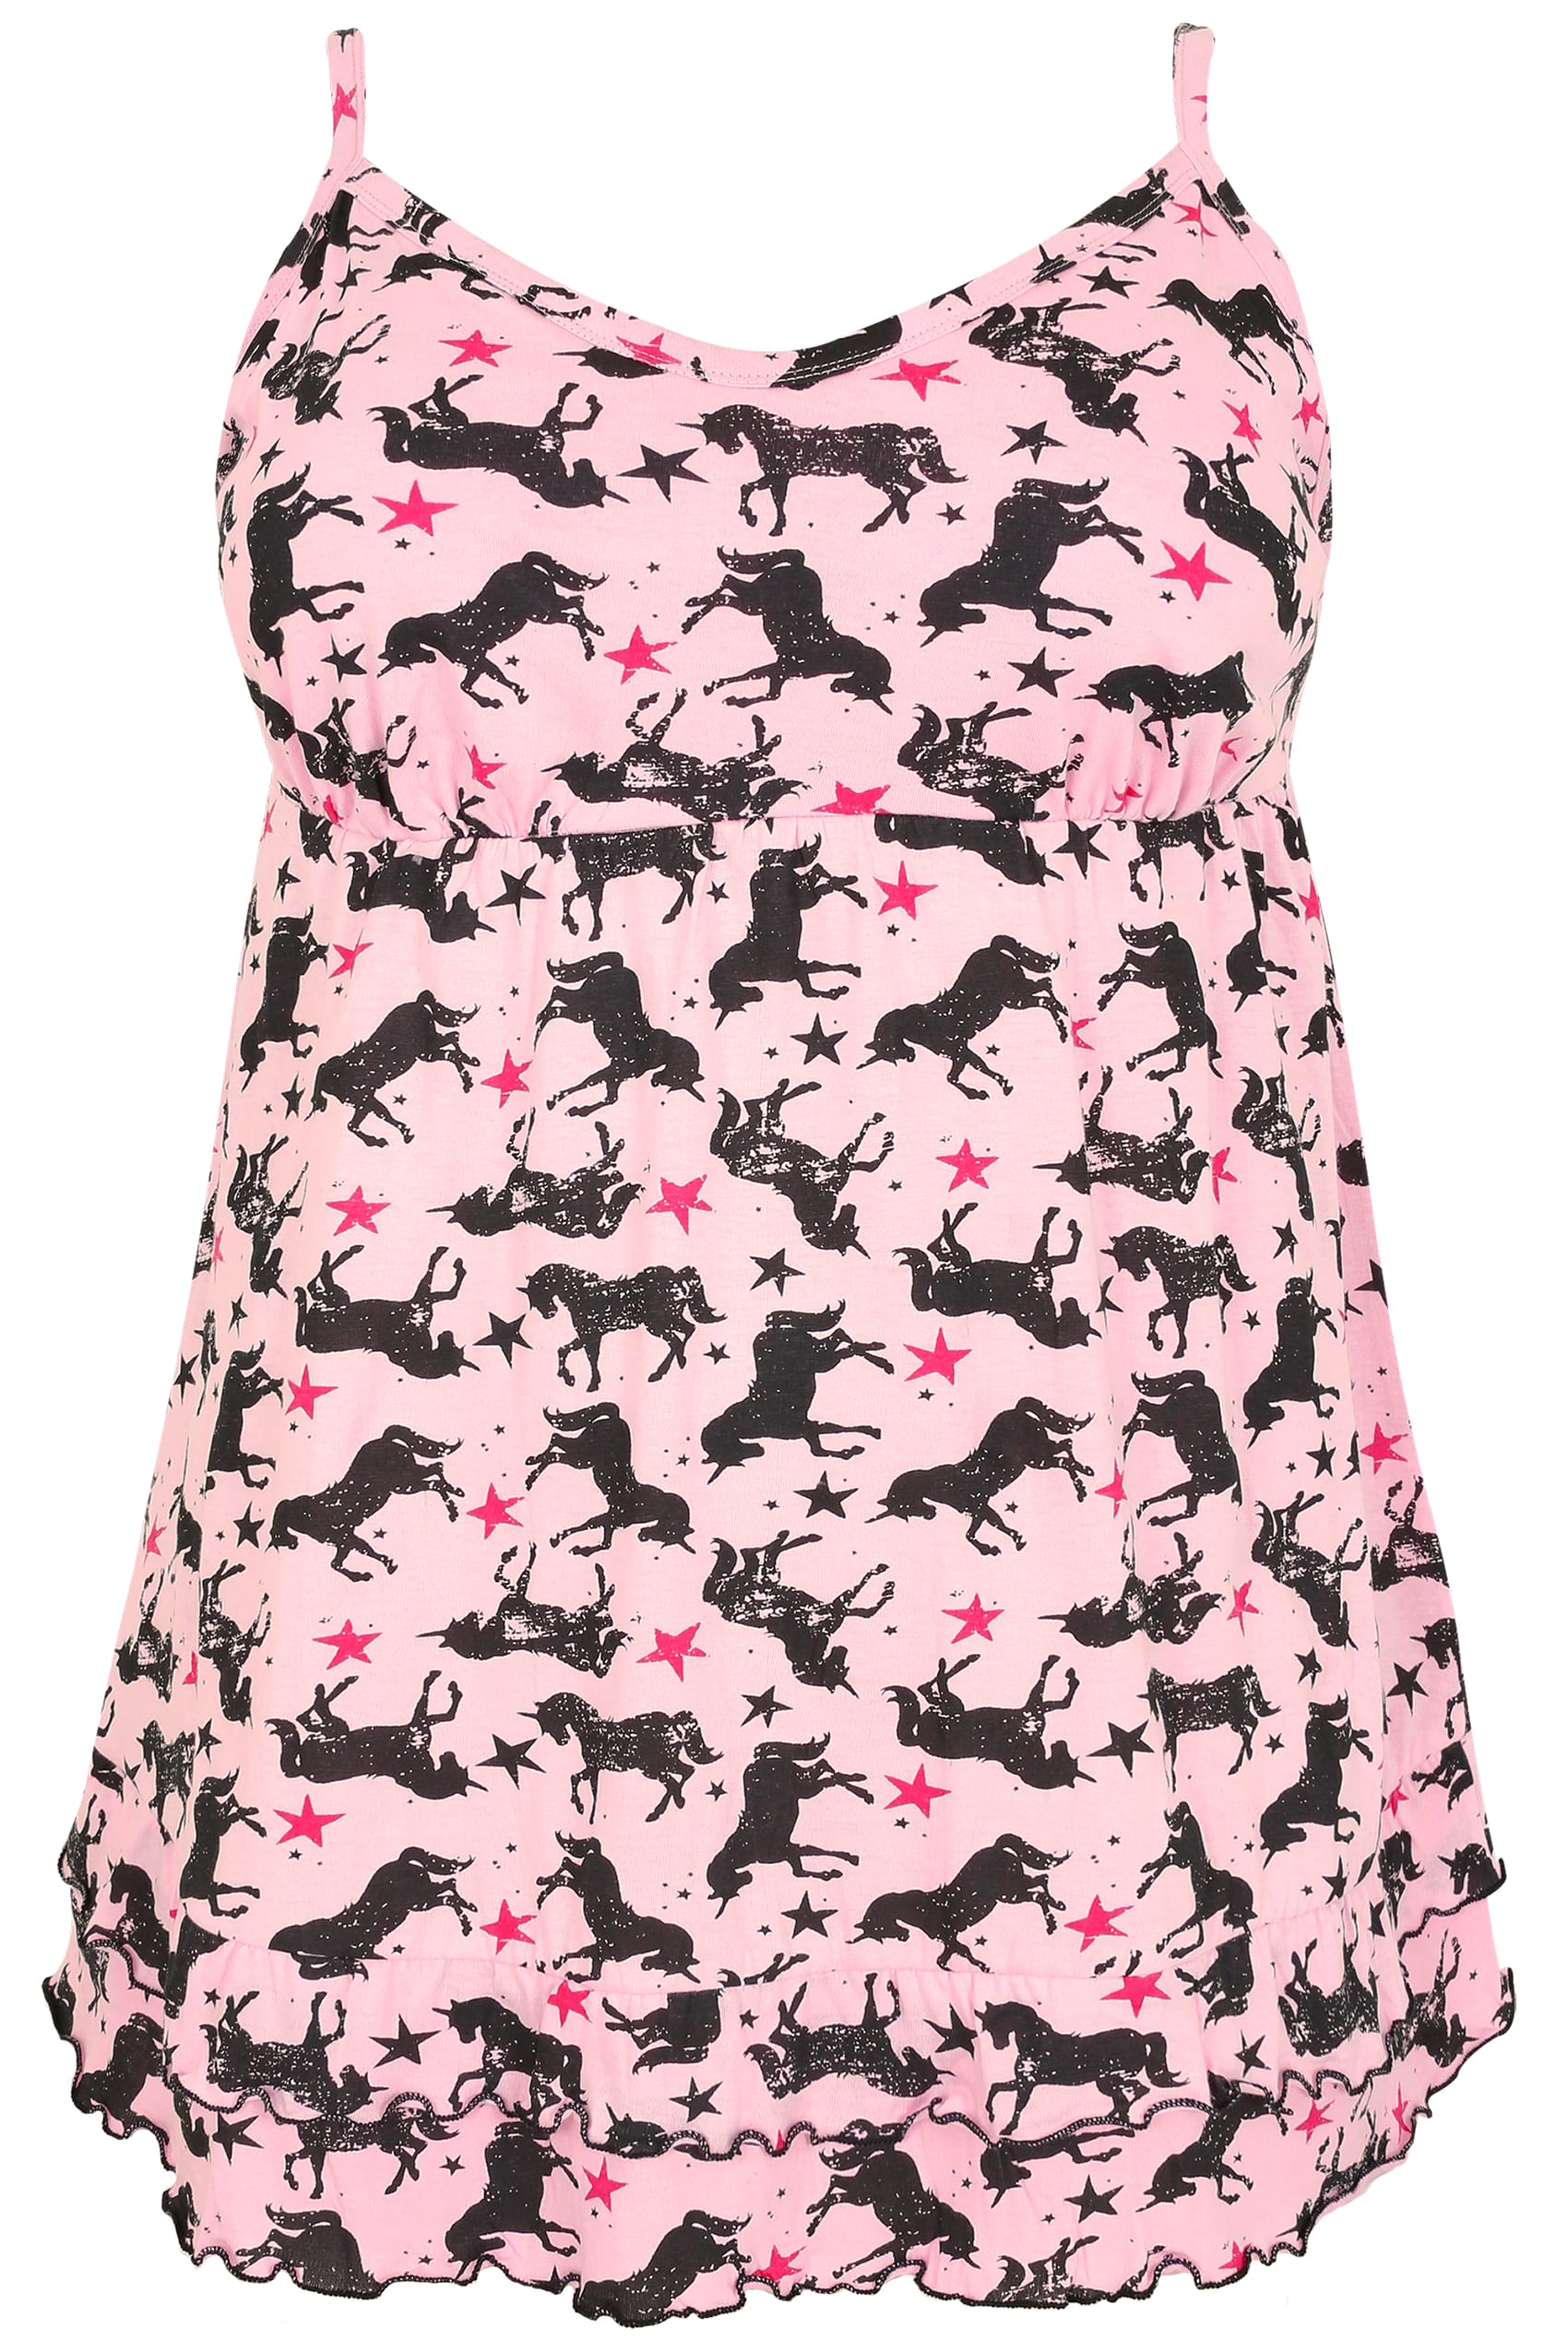 Pink Longline Unicorn Print Pyjama Cami Top With Frilled Hem, Plus size 16 to 36 3